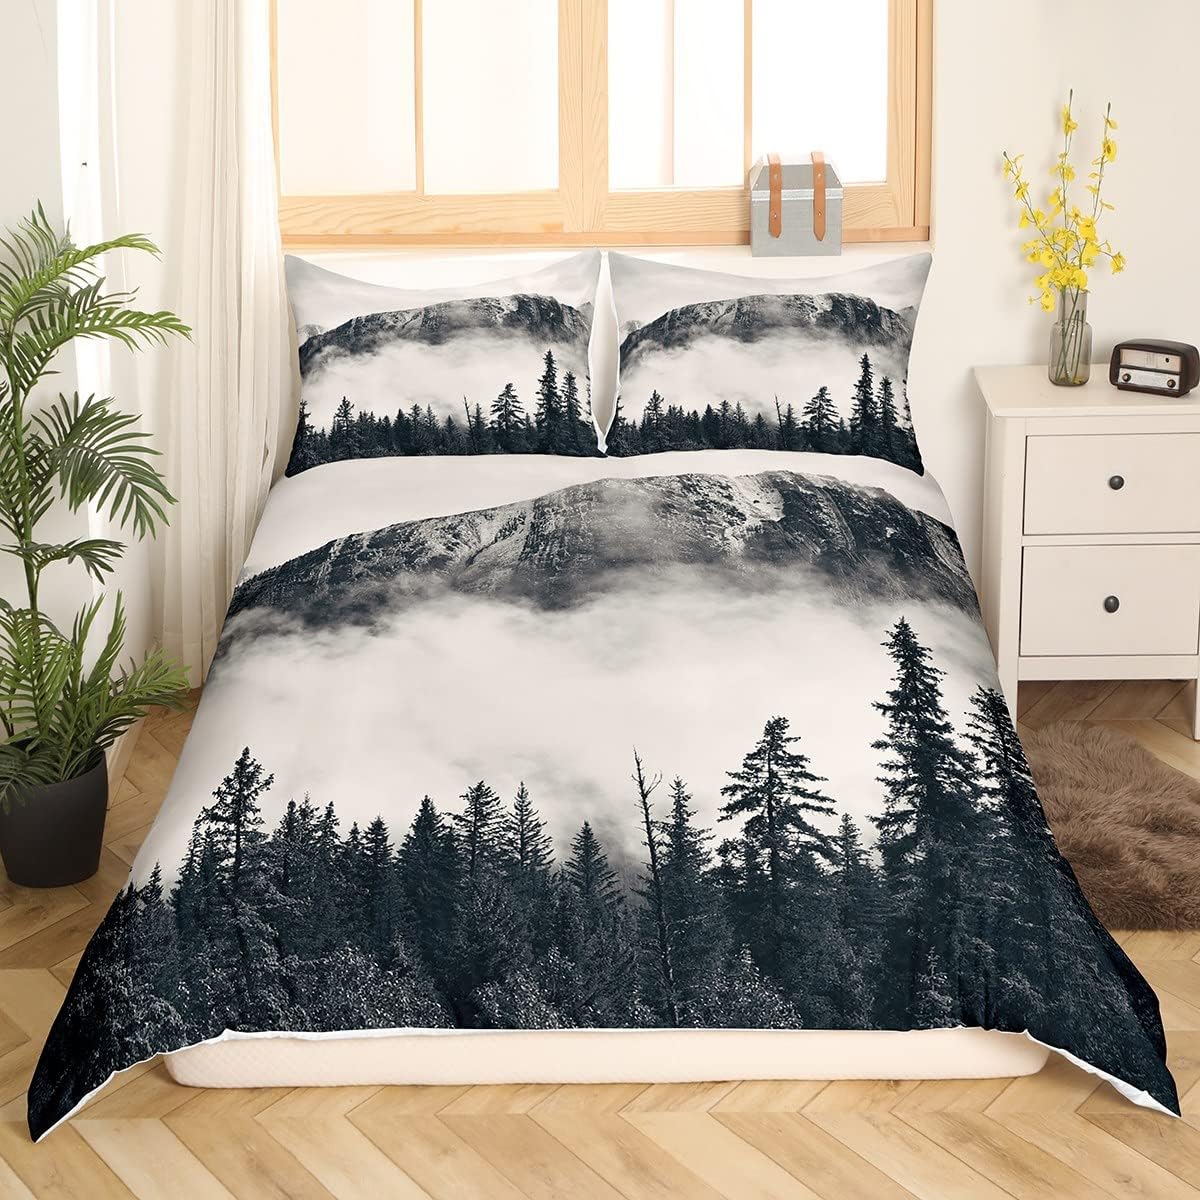 National Park Juego de ropa de cama con diseño de montaña ahumada, funda de